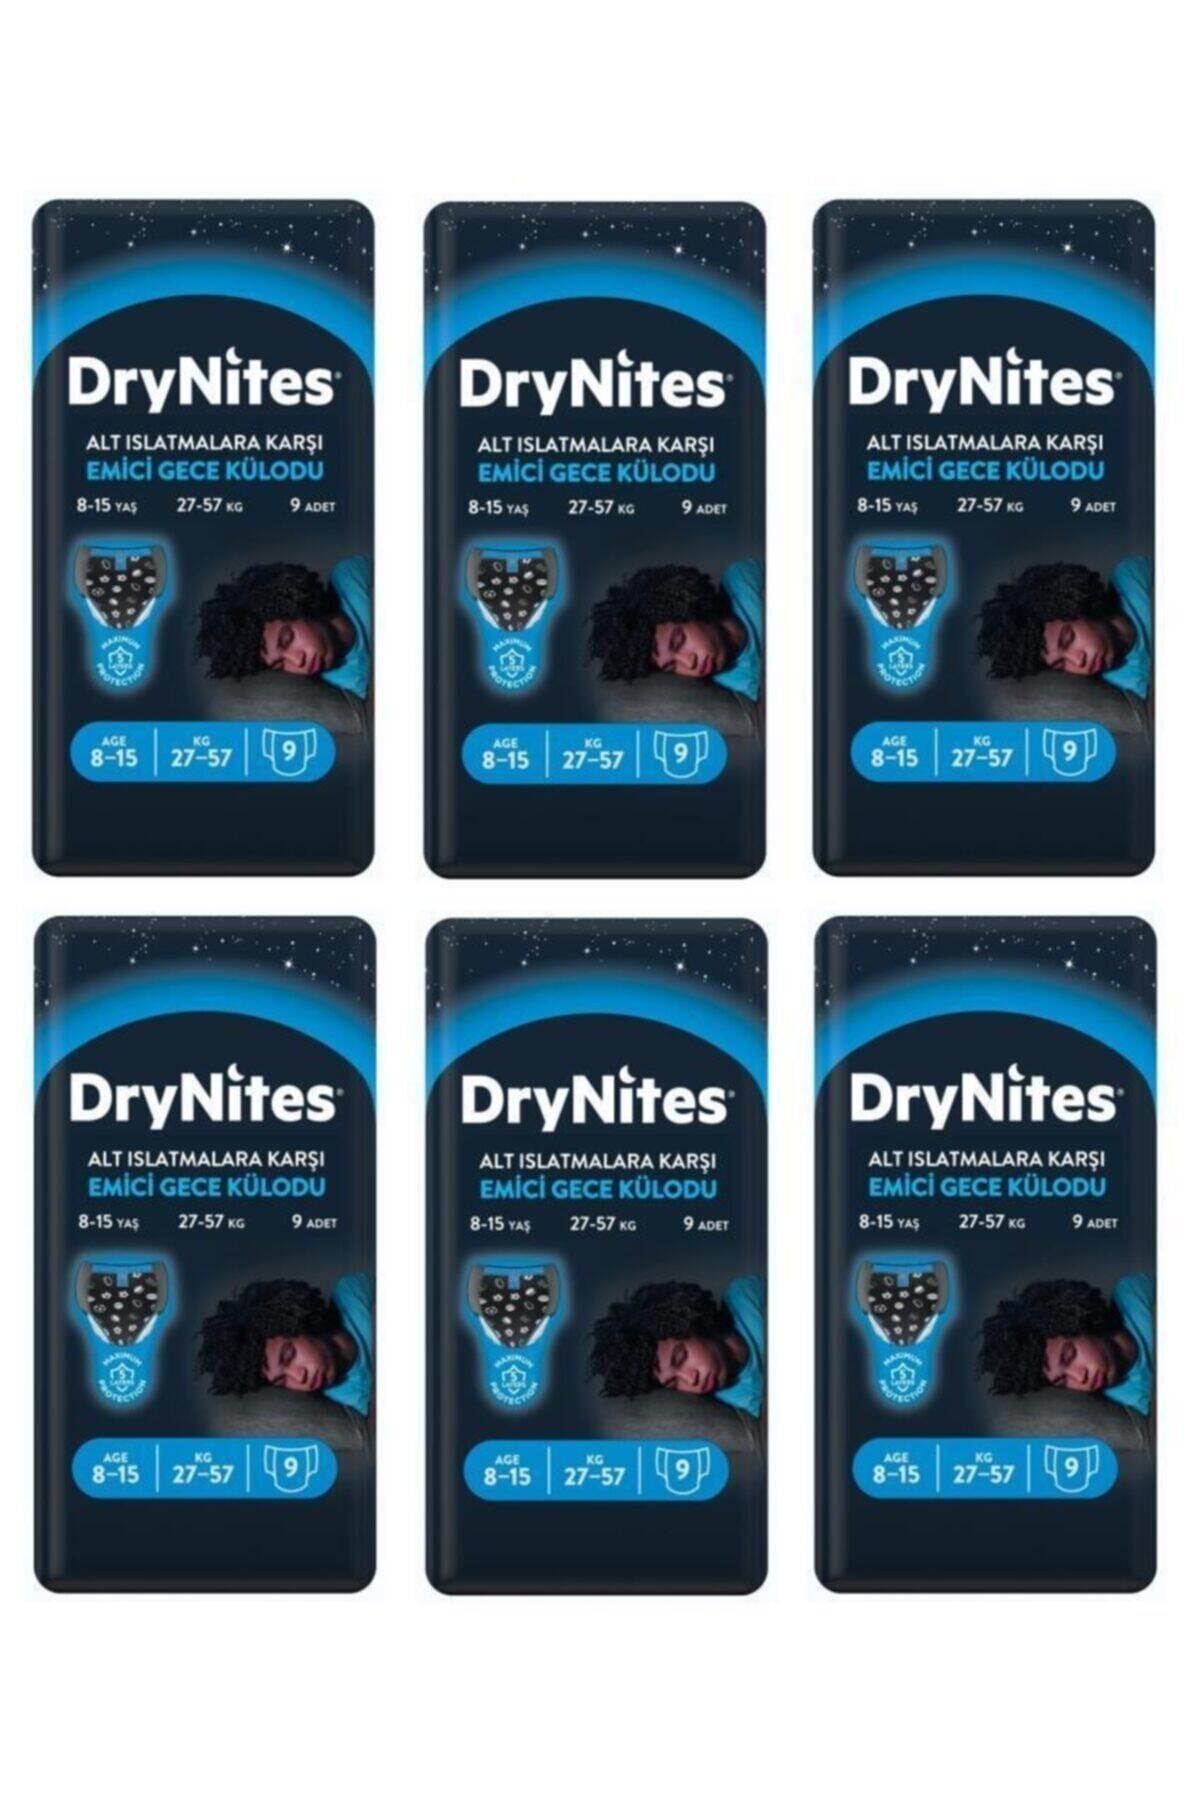 DryNites Erkek Külodu 8-15 Yaş 6lı Paket